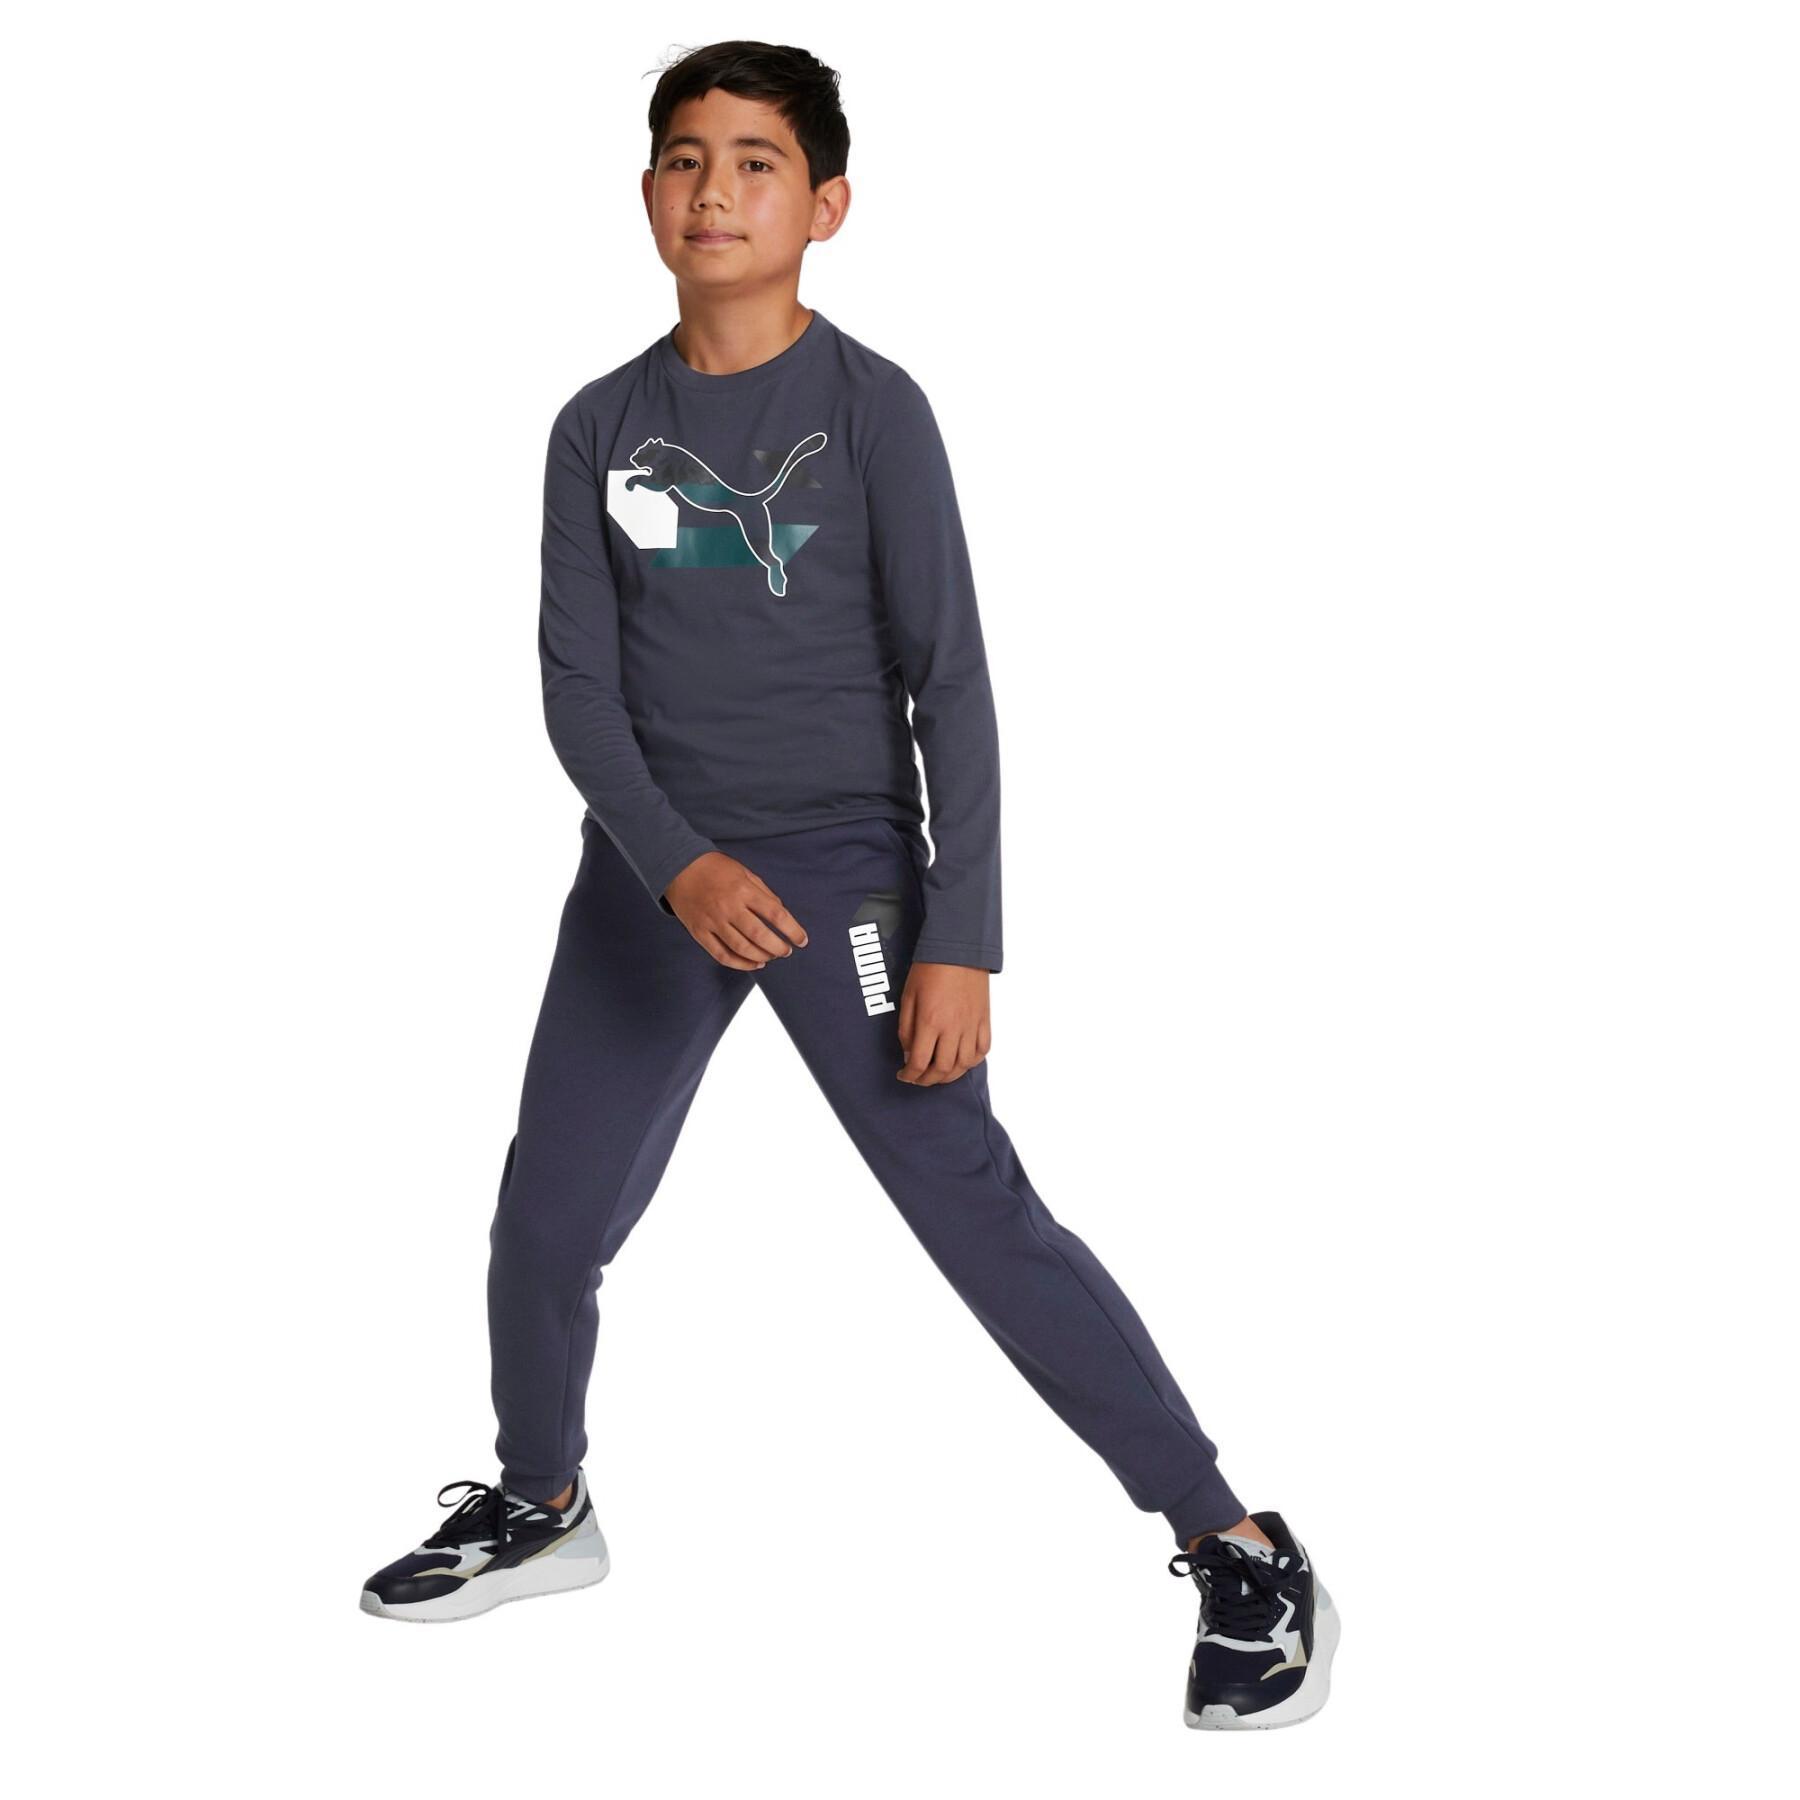 Children's jogging suit Puma Alpha FL B